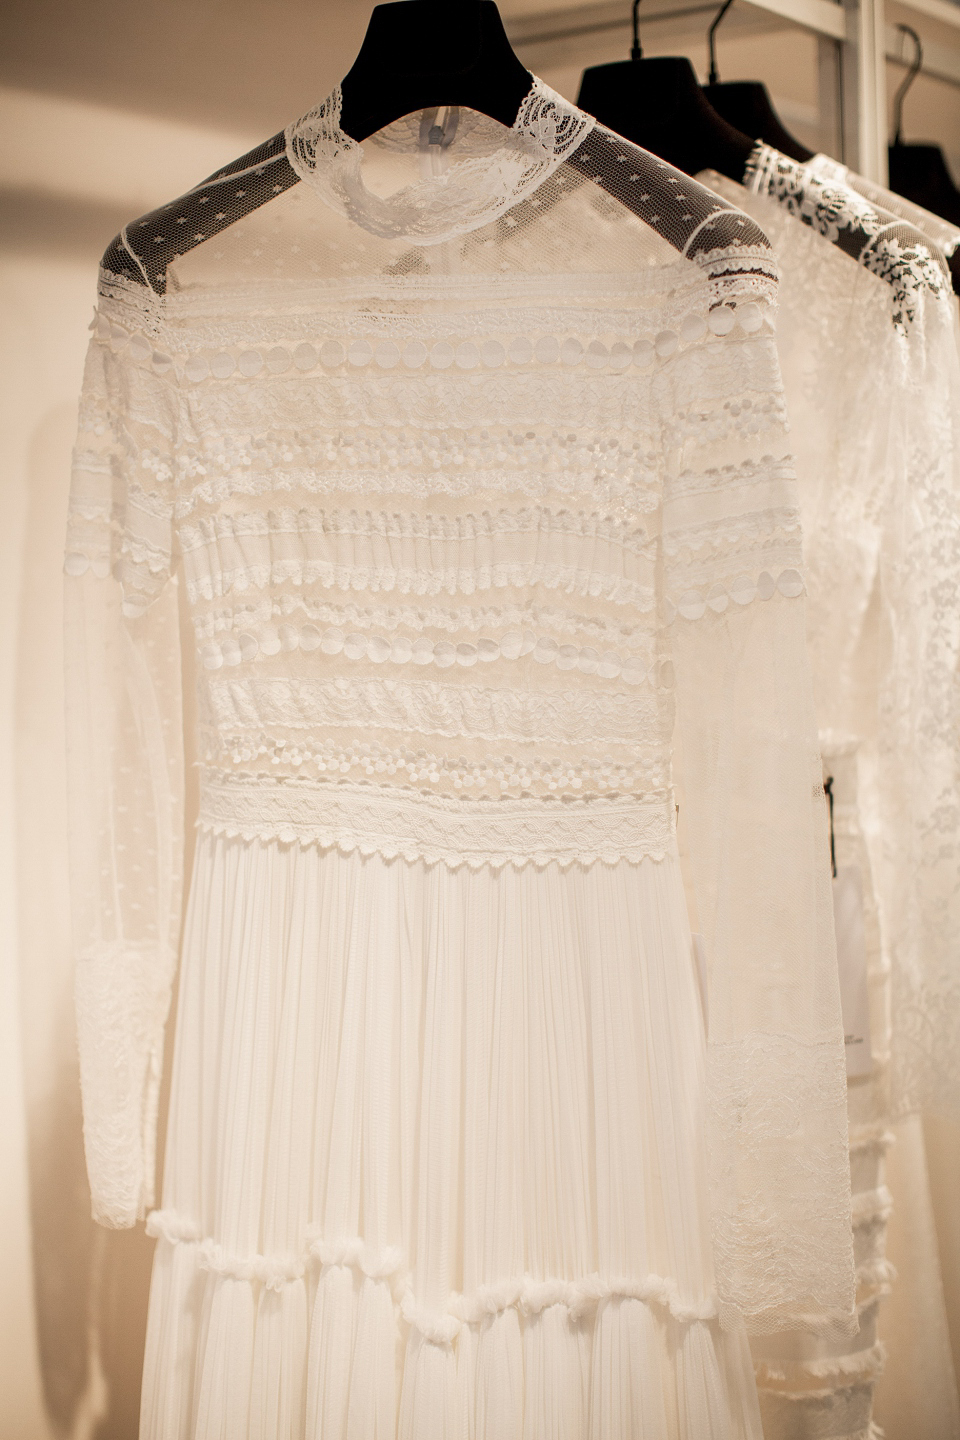 Christos Costarellos wedding dresses at The White Gallery, London, April 2014